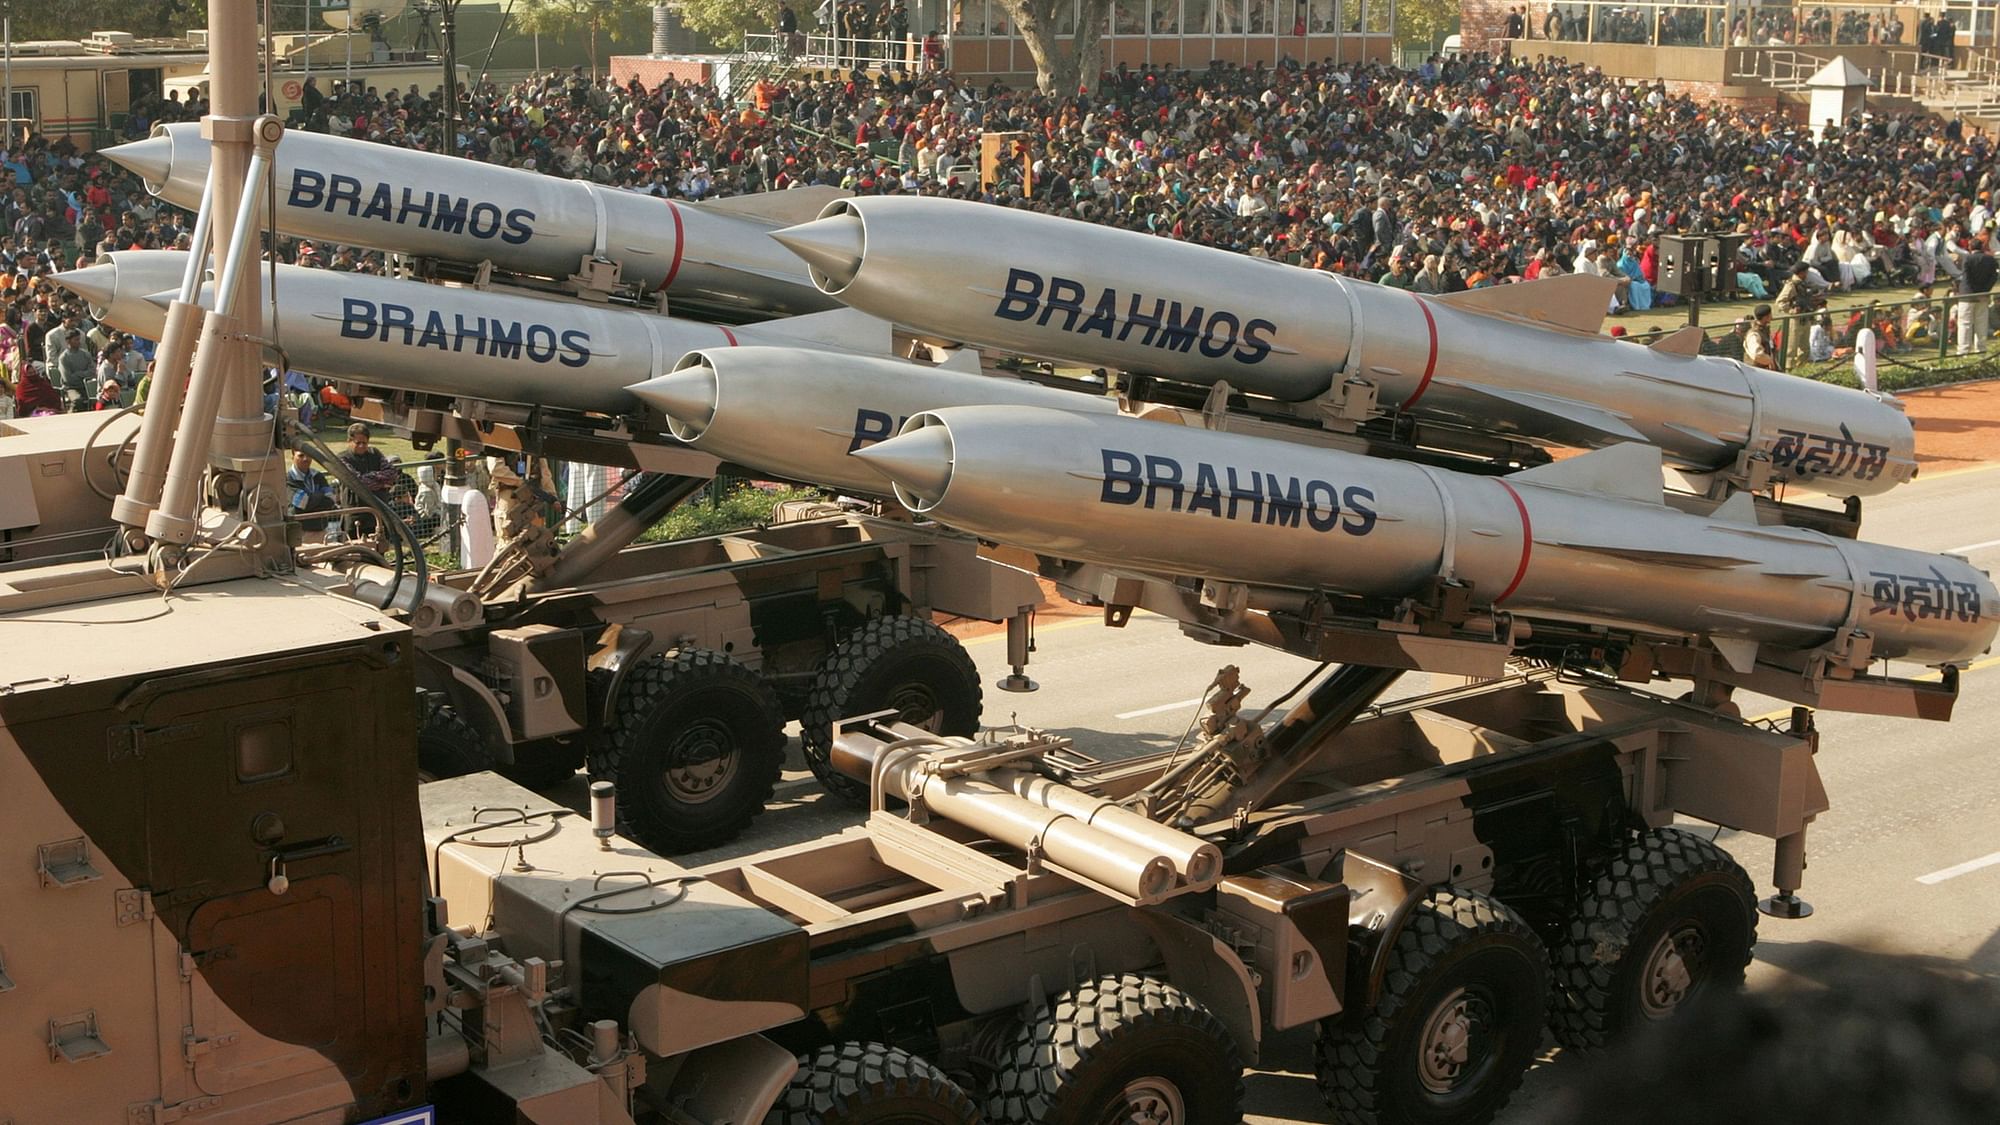 <div class="paragraphs"><p>BrahMos missiles. Image used for representational purposes.&nbsp;</p></div>